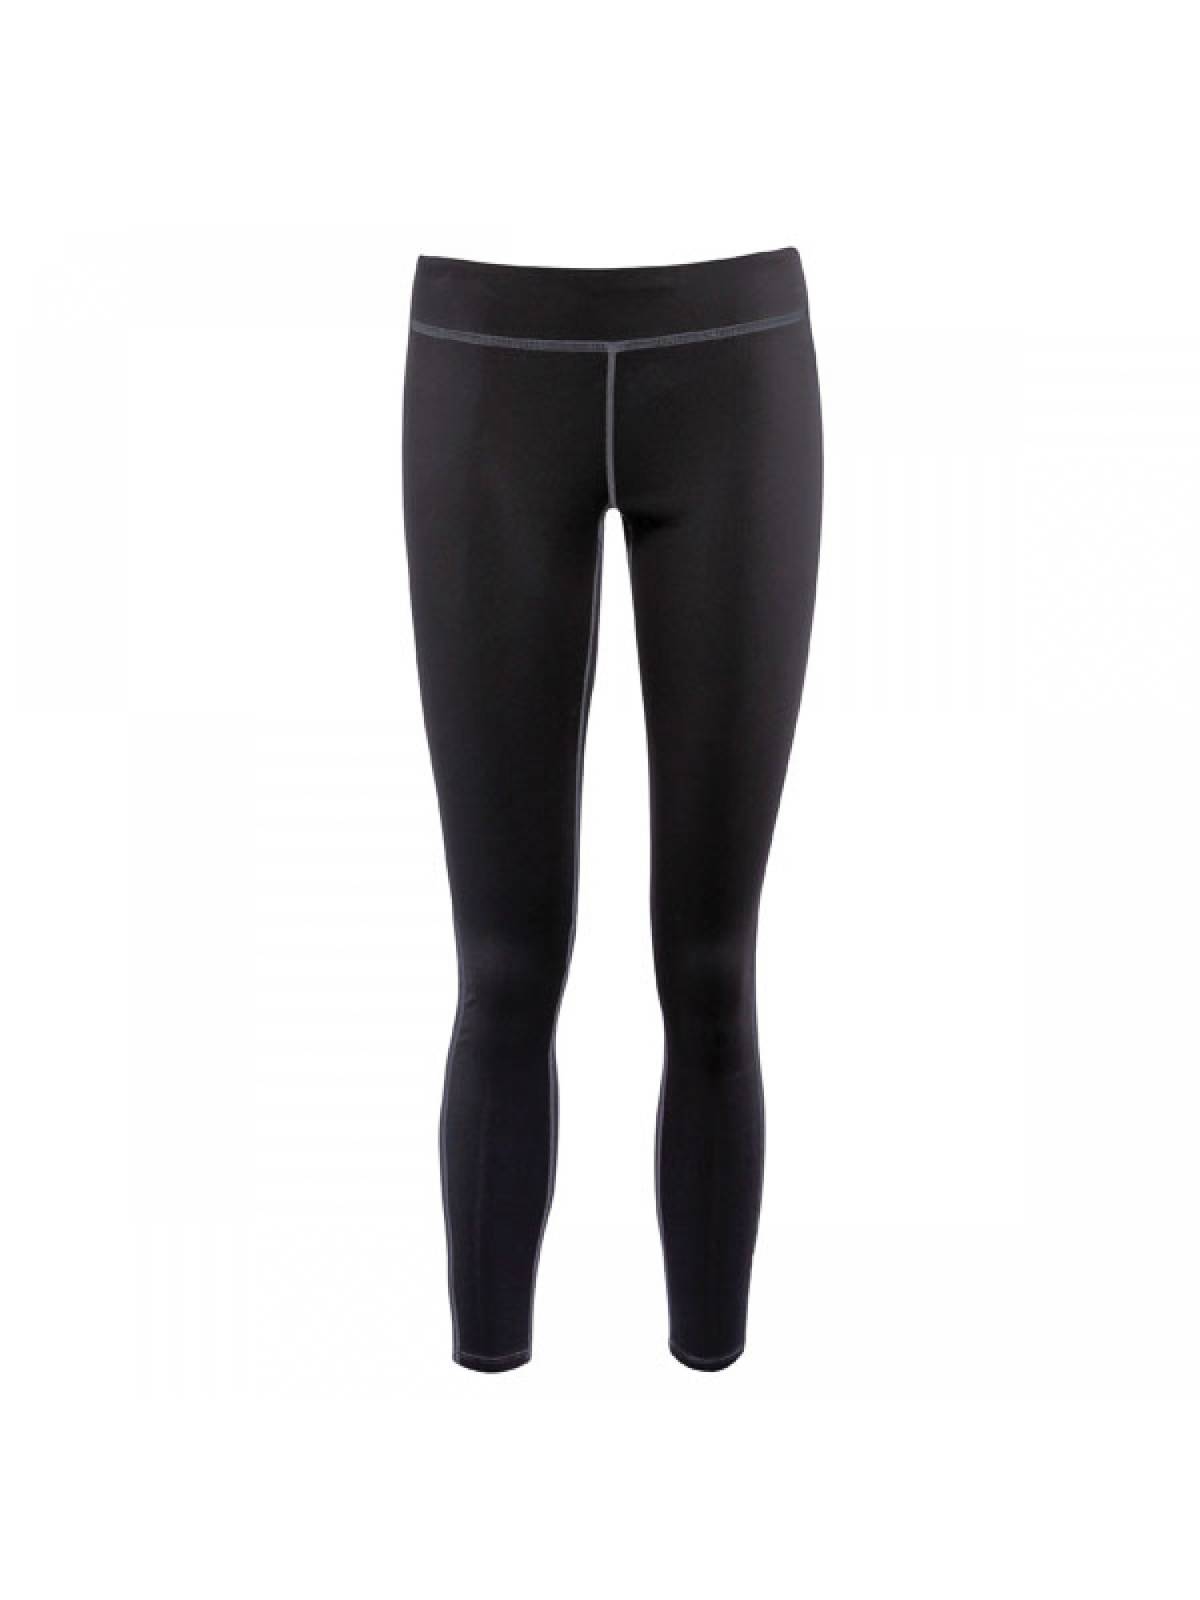 Jaco Athletic Pants for Women, Black Activewear Yoga Pants with Elastic Waistband, Large - image 1 of 5